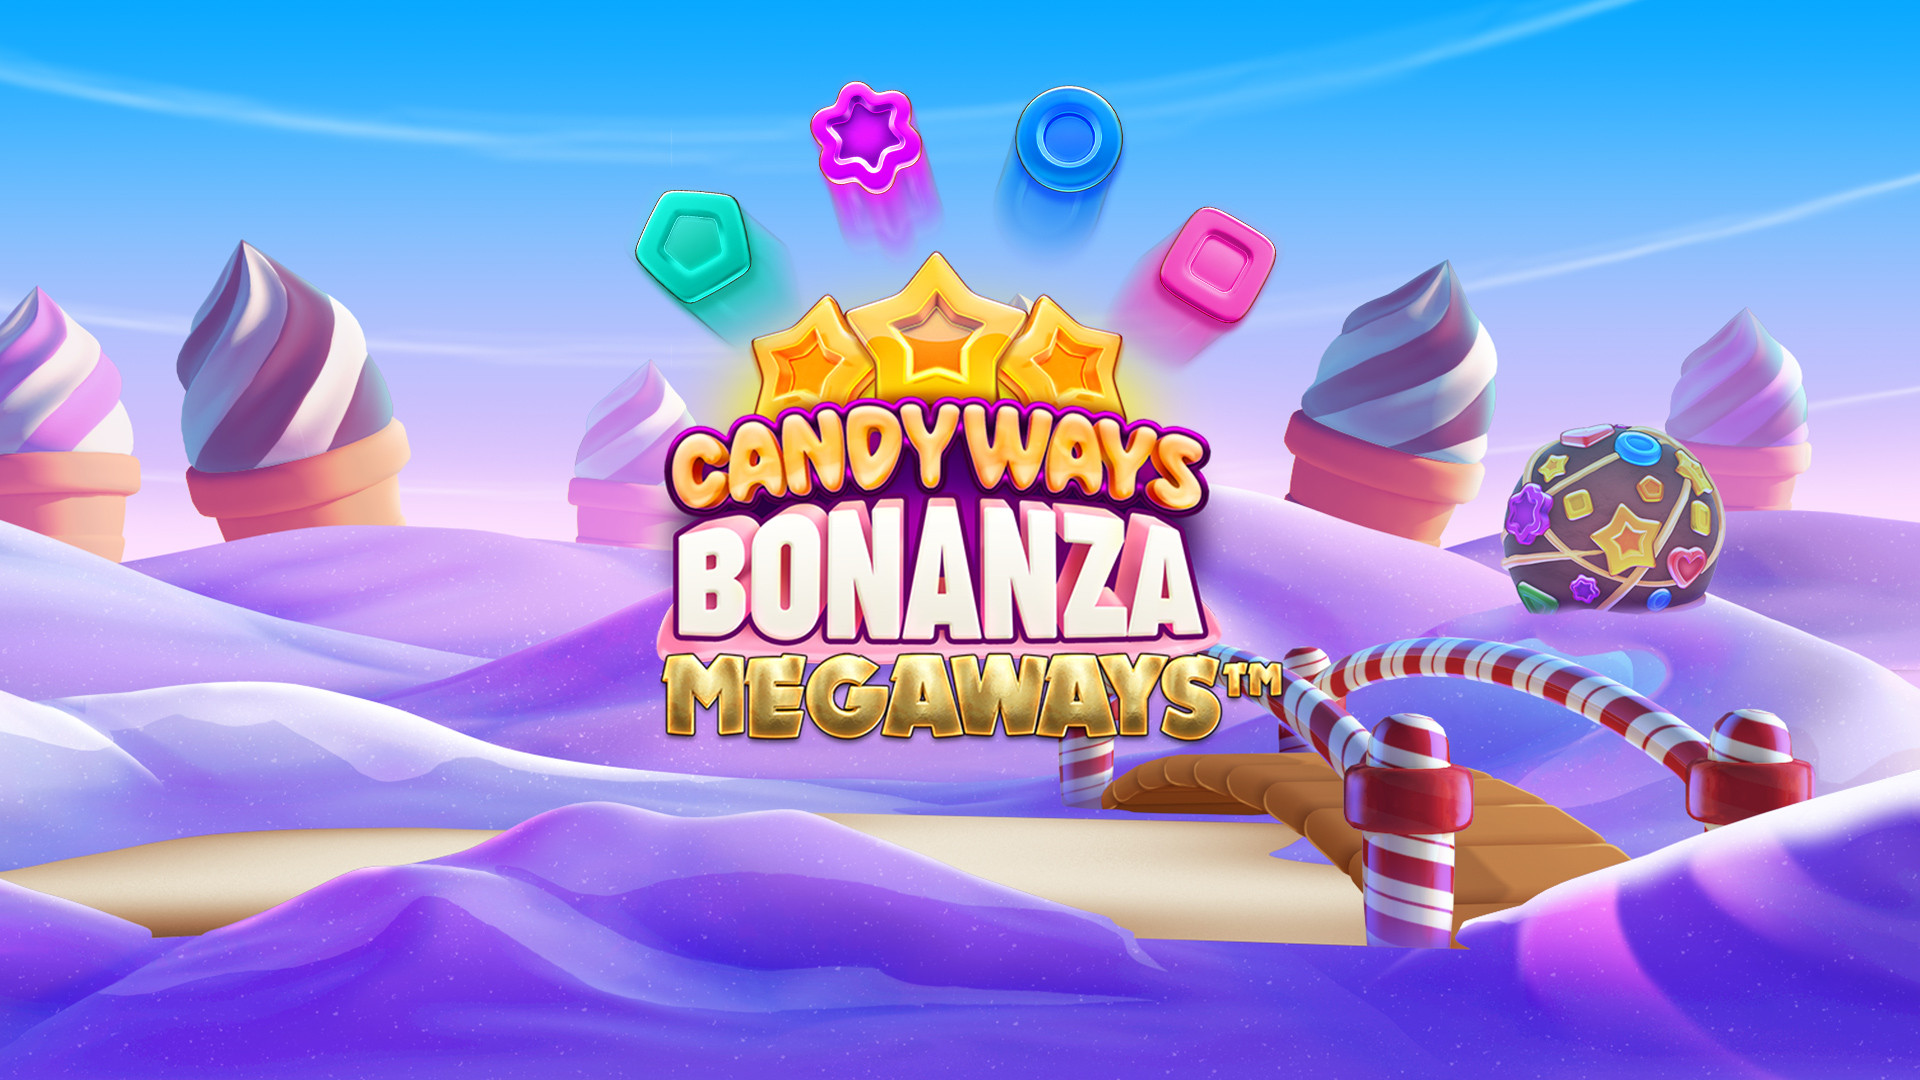 Candyways Bonanza MEGAWAYS